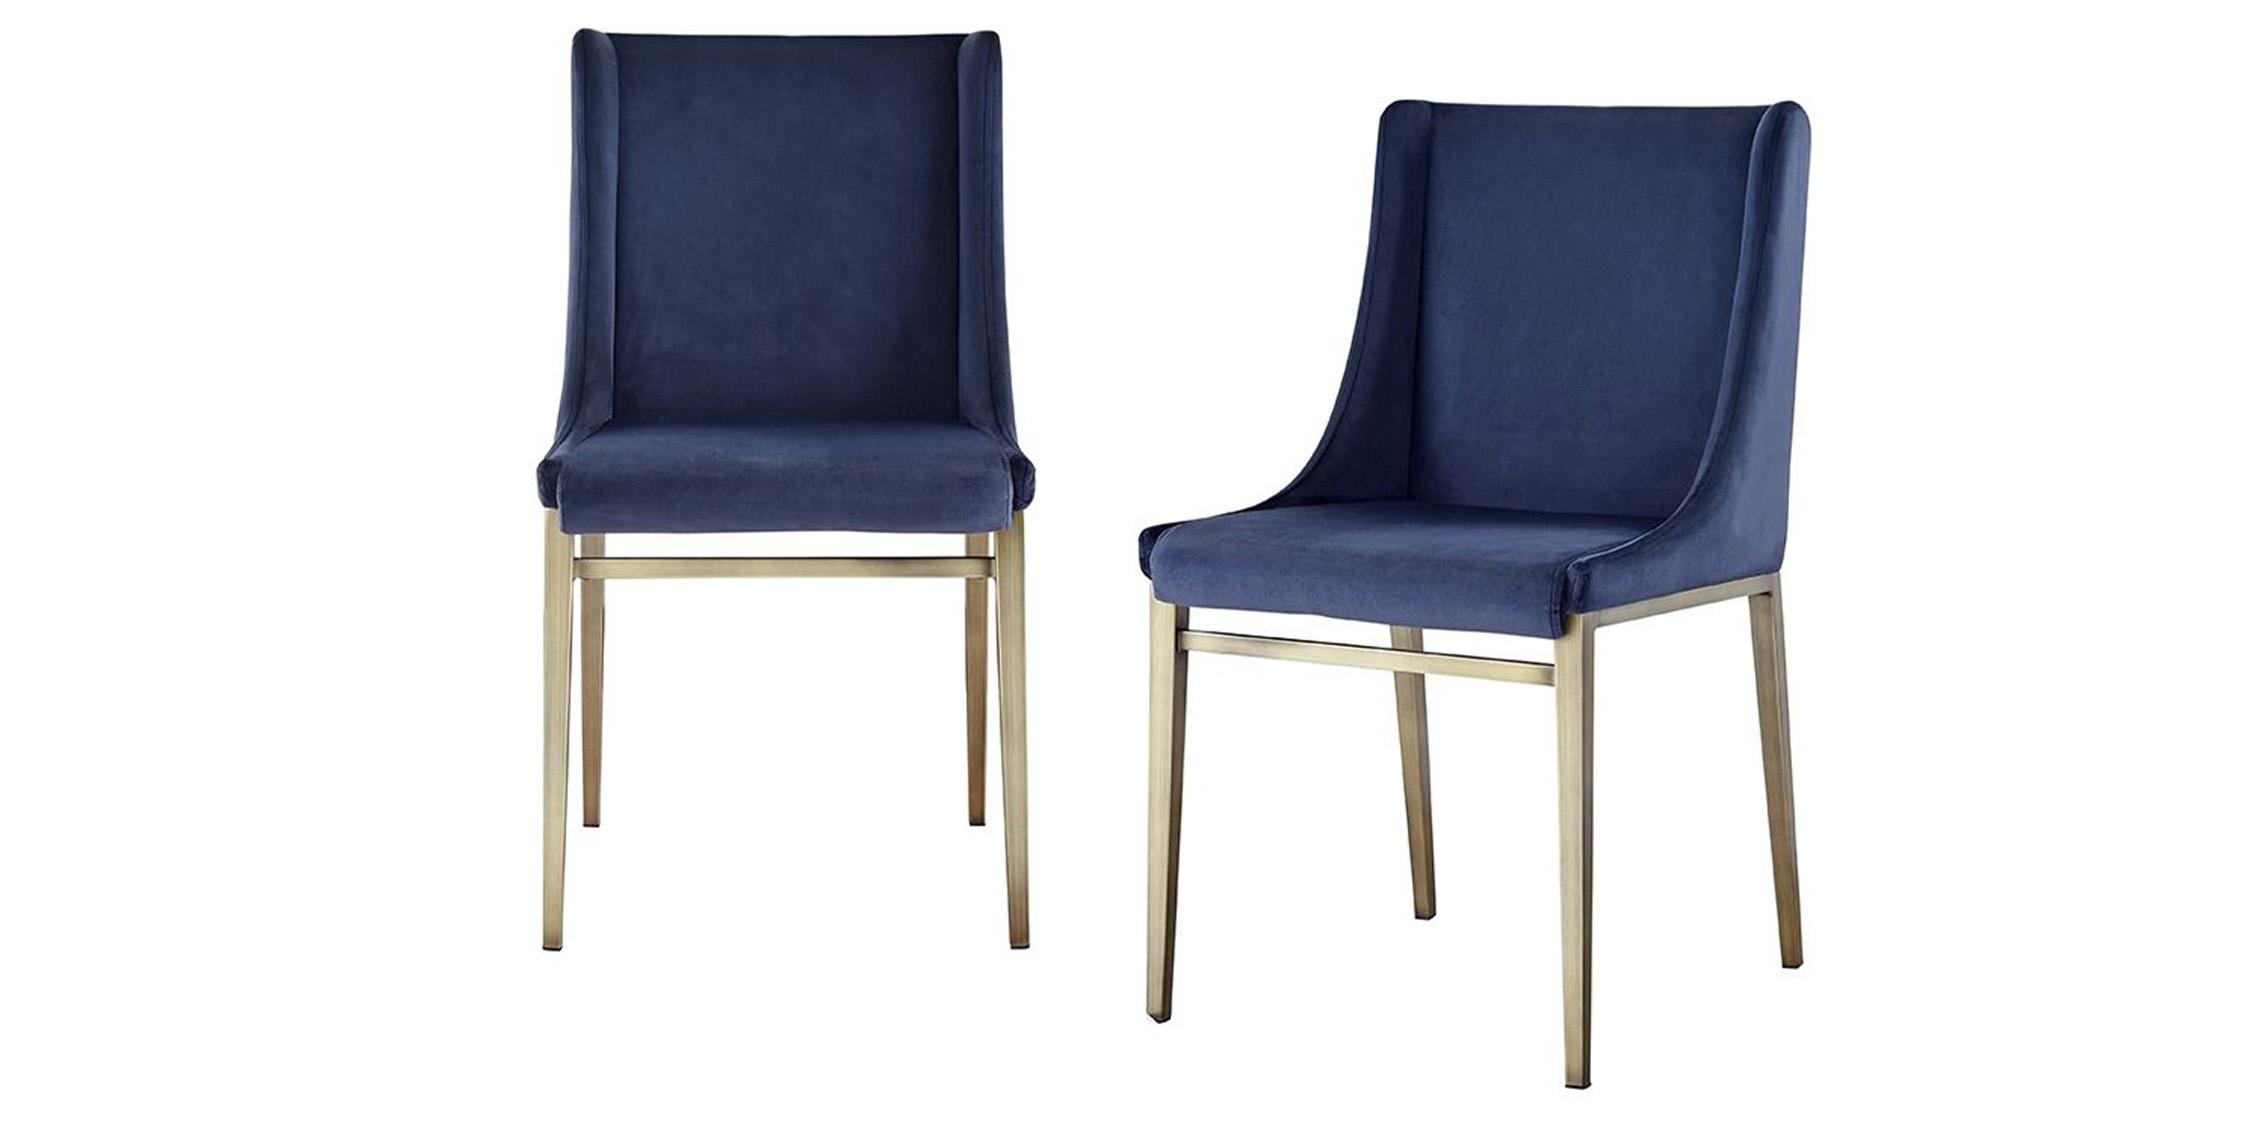 Contemporary, Modern Dining Chair Set VGGAGA-6544CH-BLU-DC VGGAGA-6544CH-BLU-DC in Blue Fabric